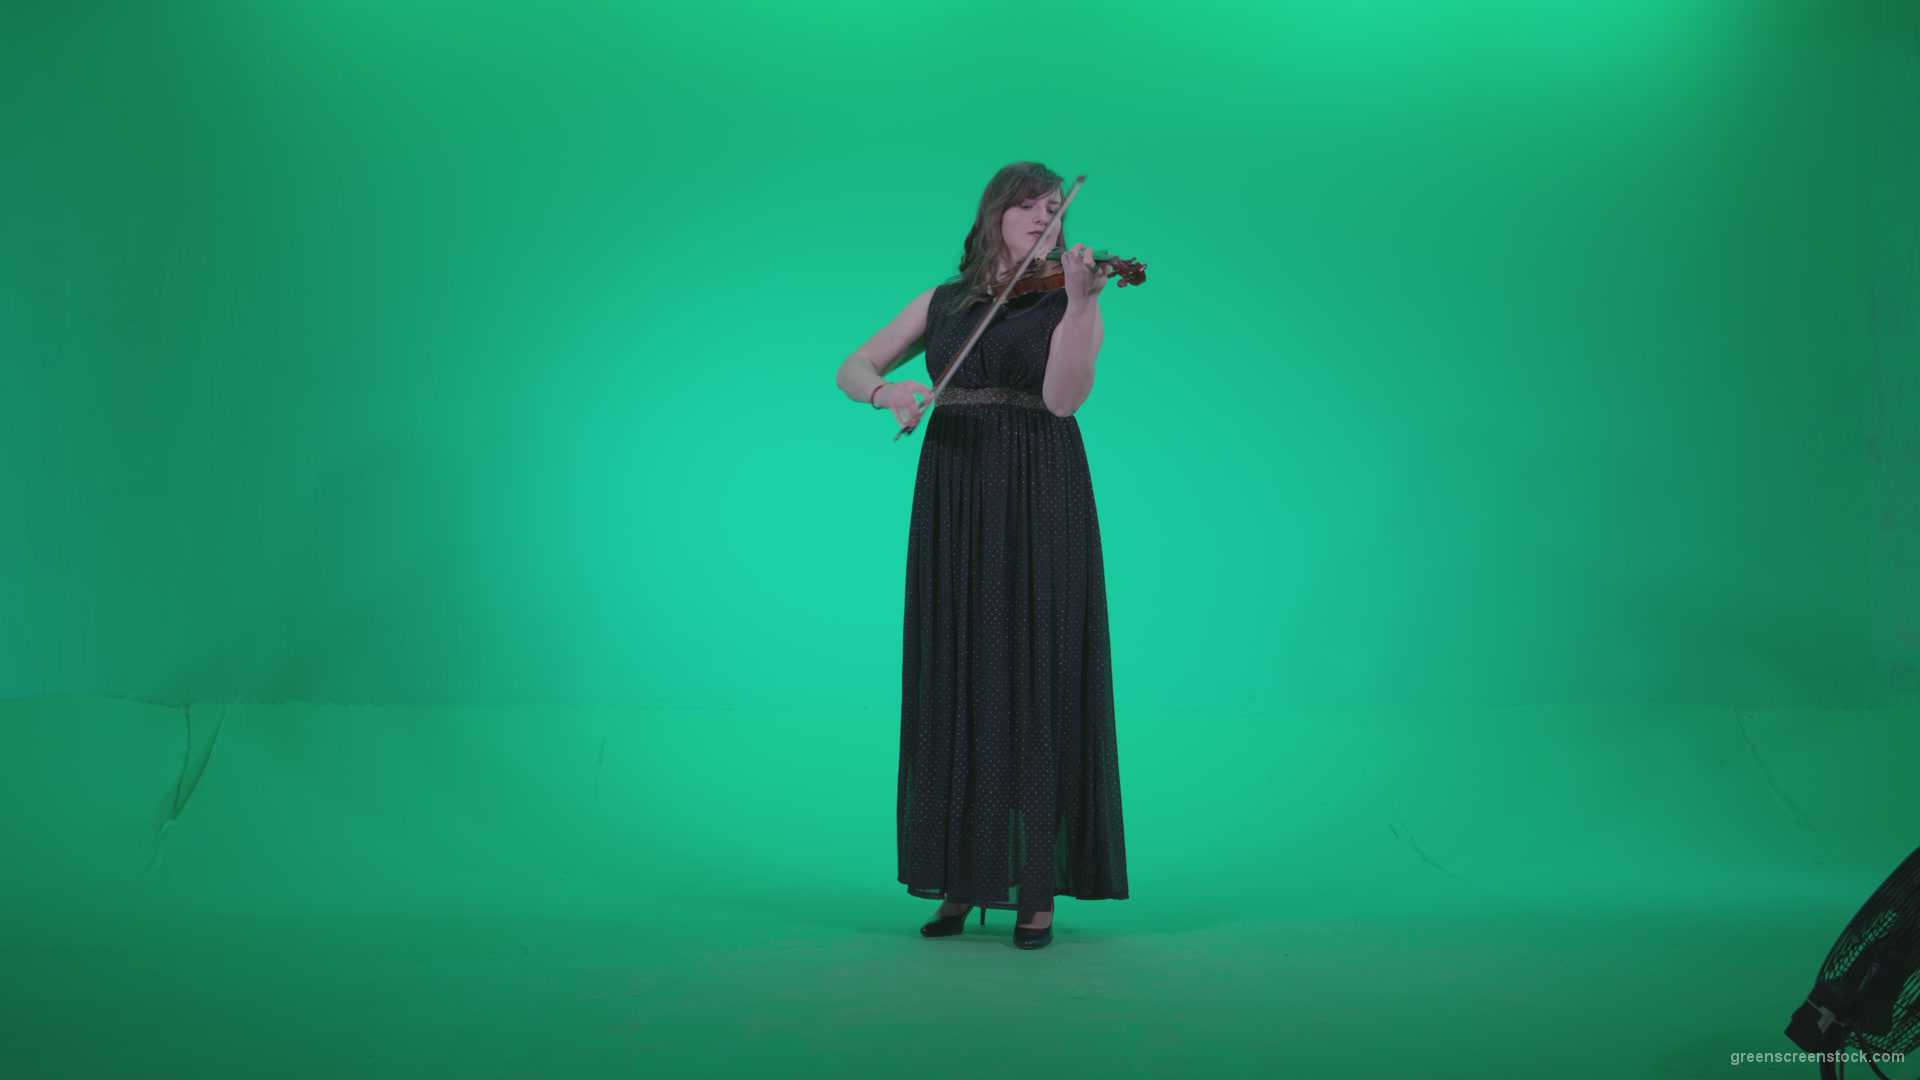 Professional-Violin-player-woman-z1_004 Green Screen Stock